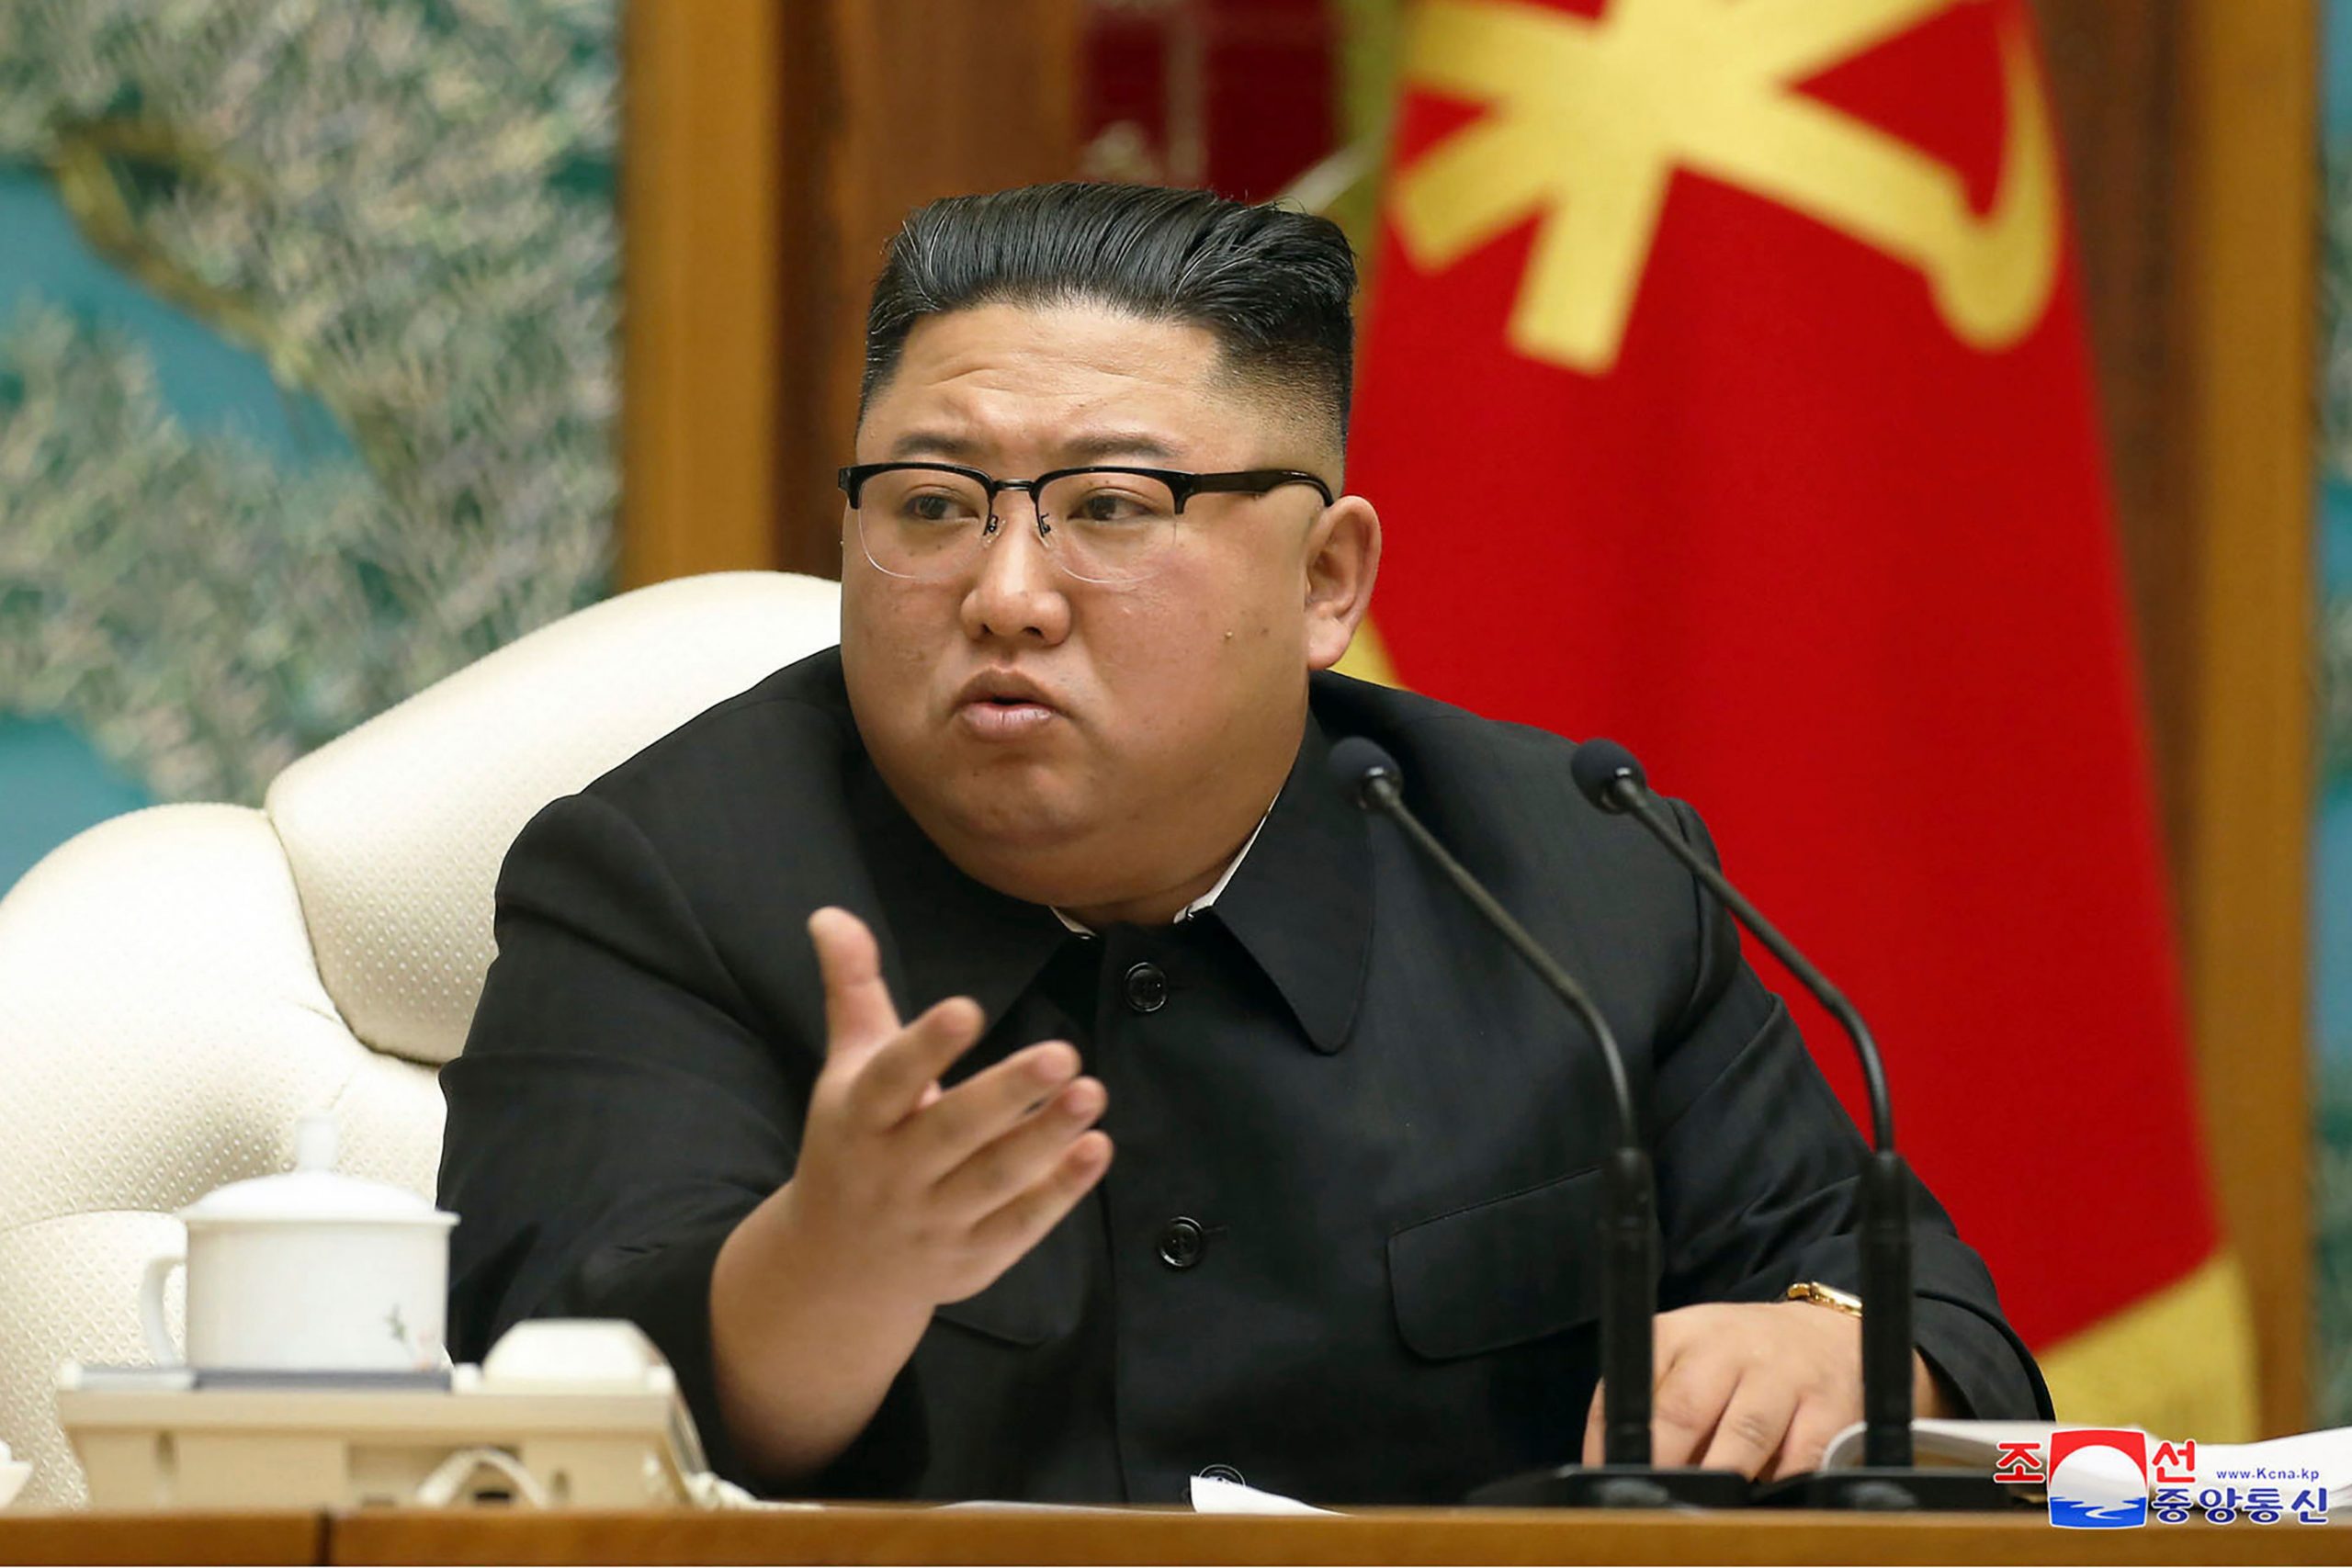 K-pop is vicious cancer, says North Korea leader Kim Jong-Un: Reports